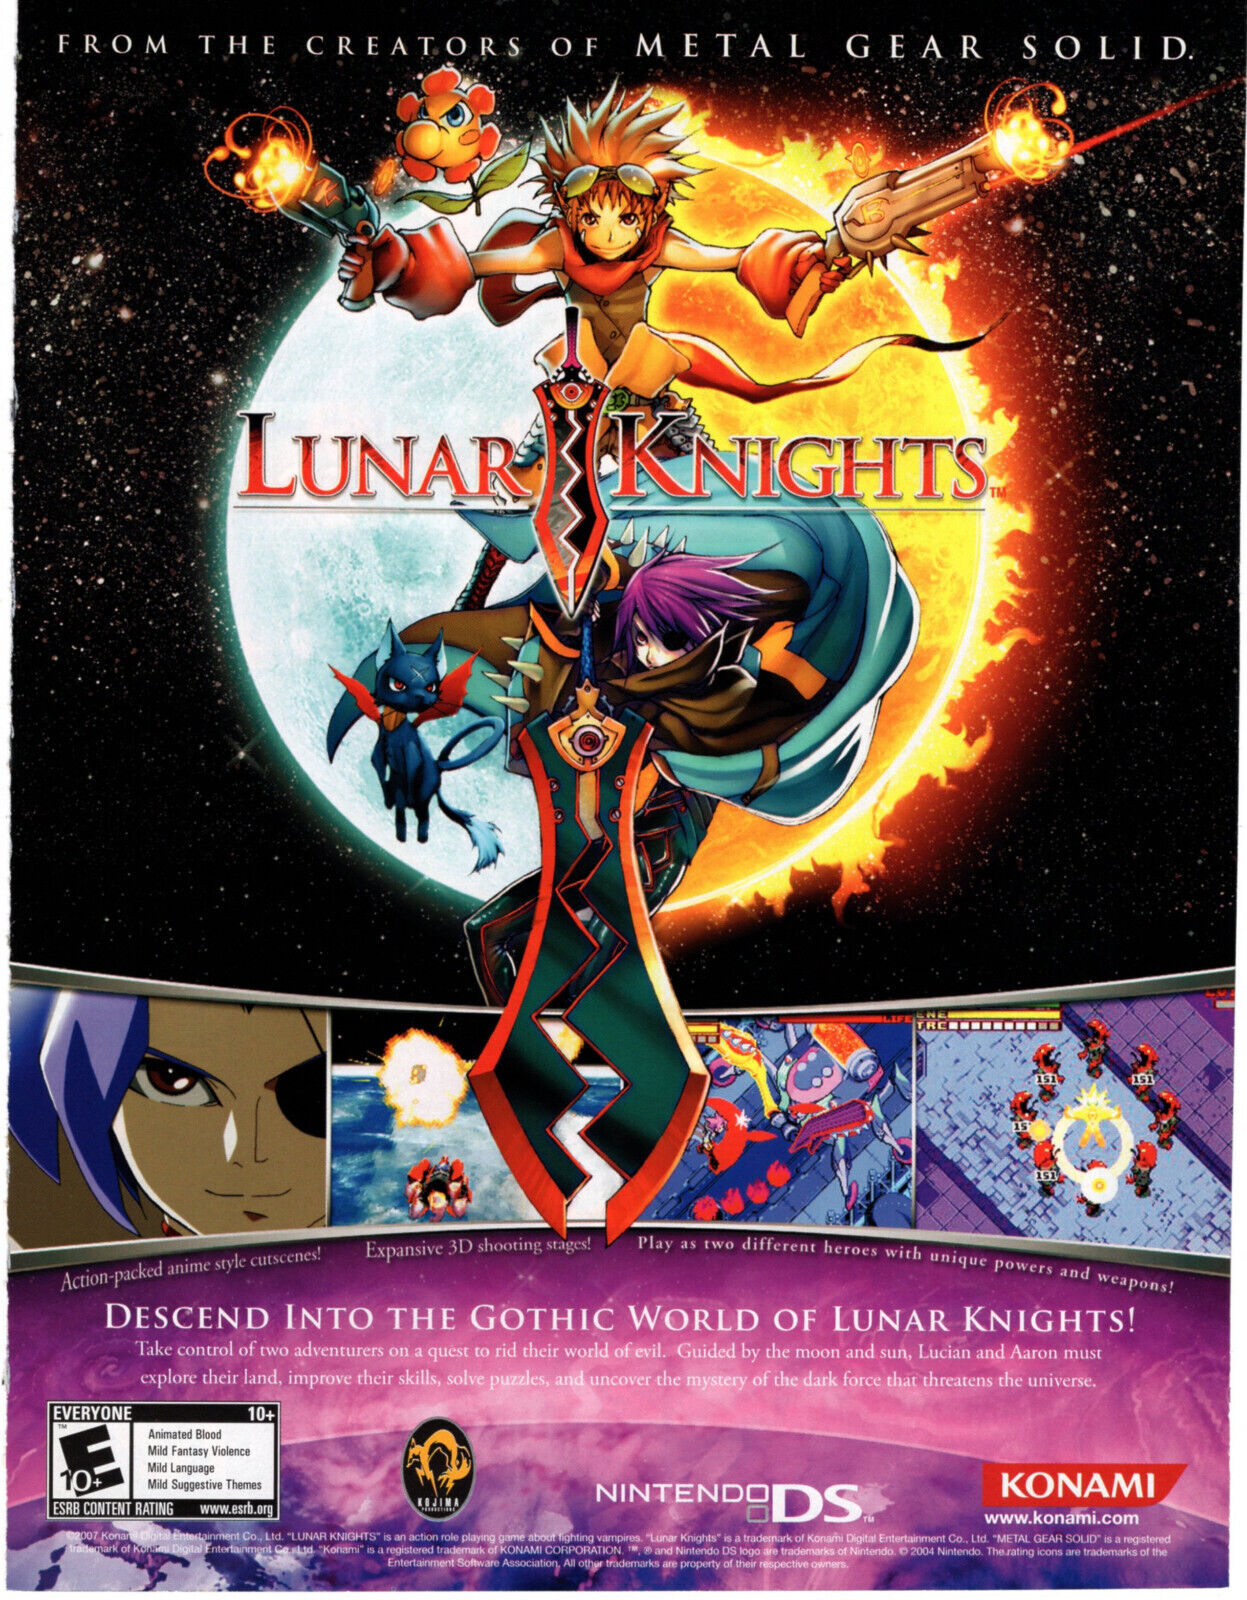 Lunar Knights Nintendo DS Konami 2007 Vintage Print Ad Original Man Cave Decor